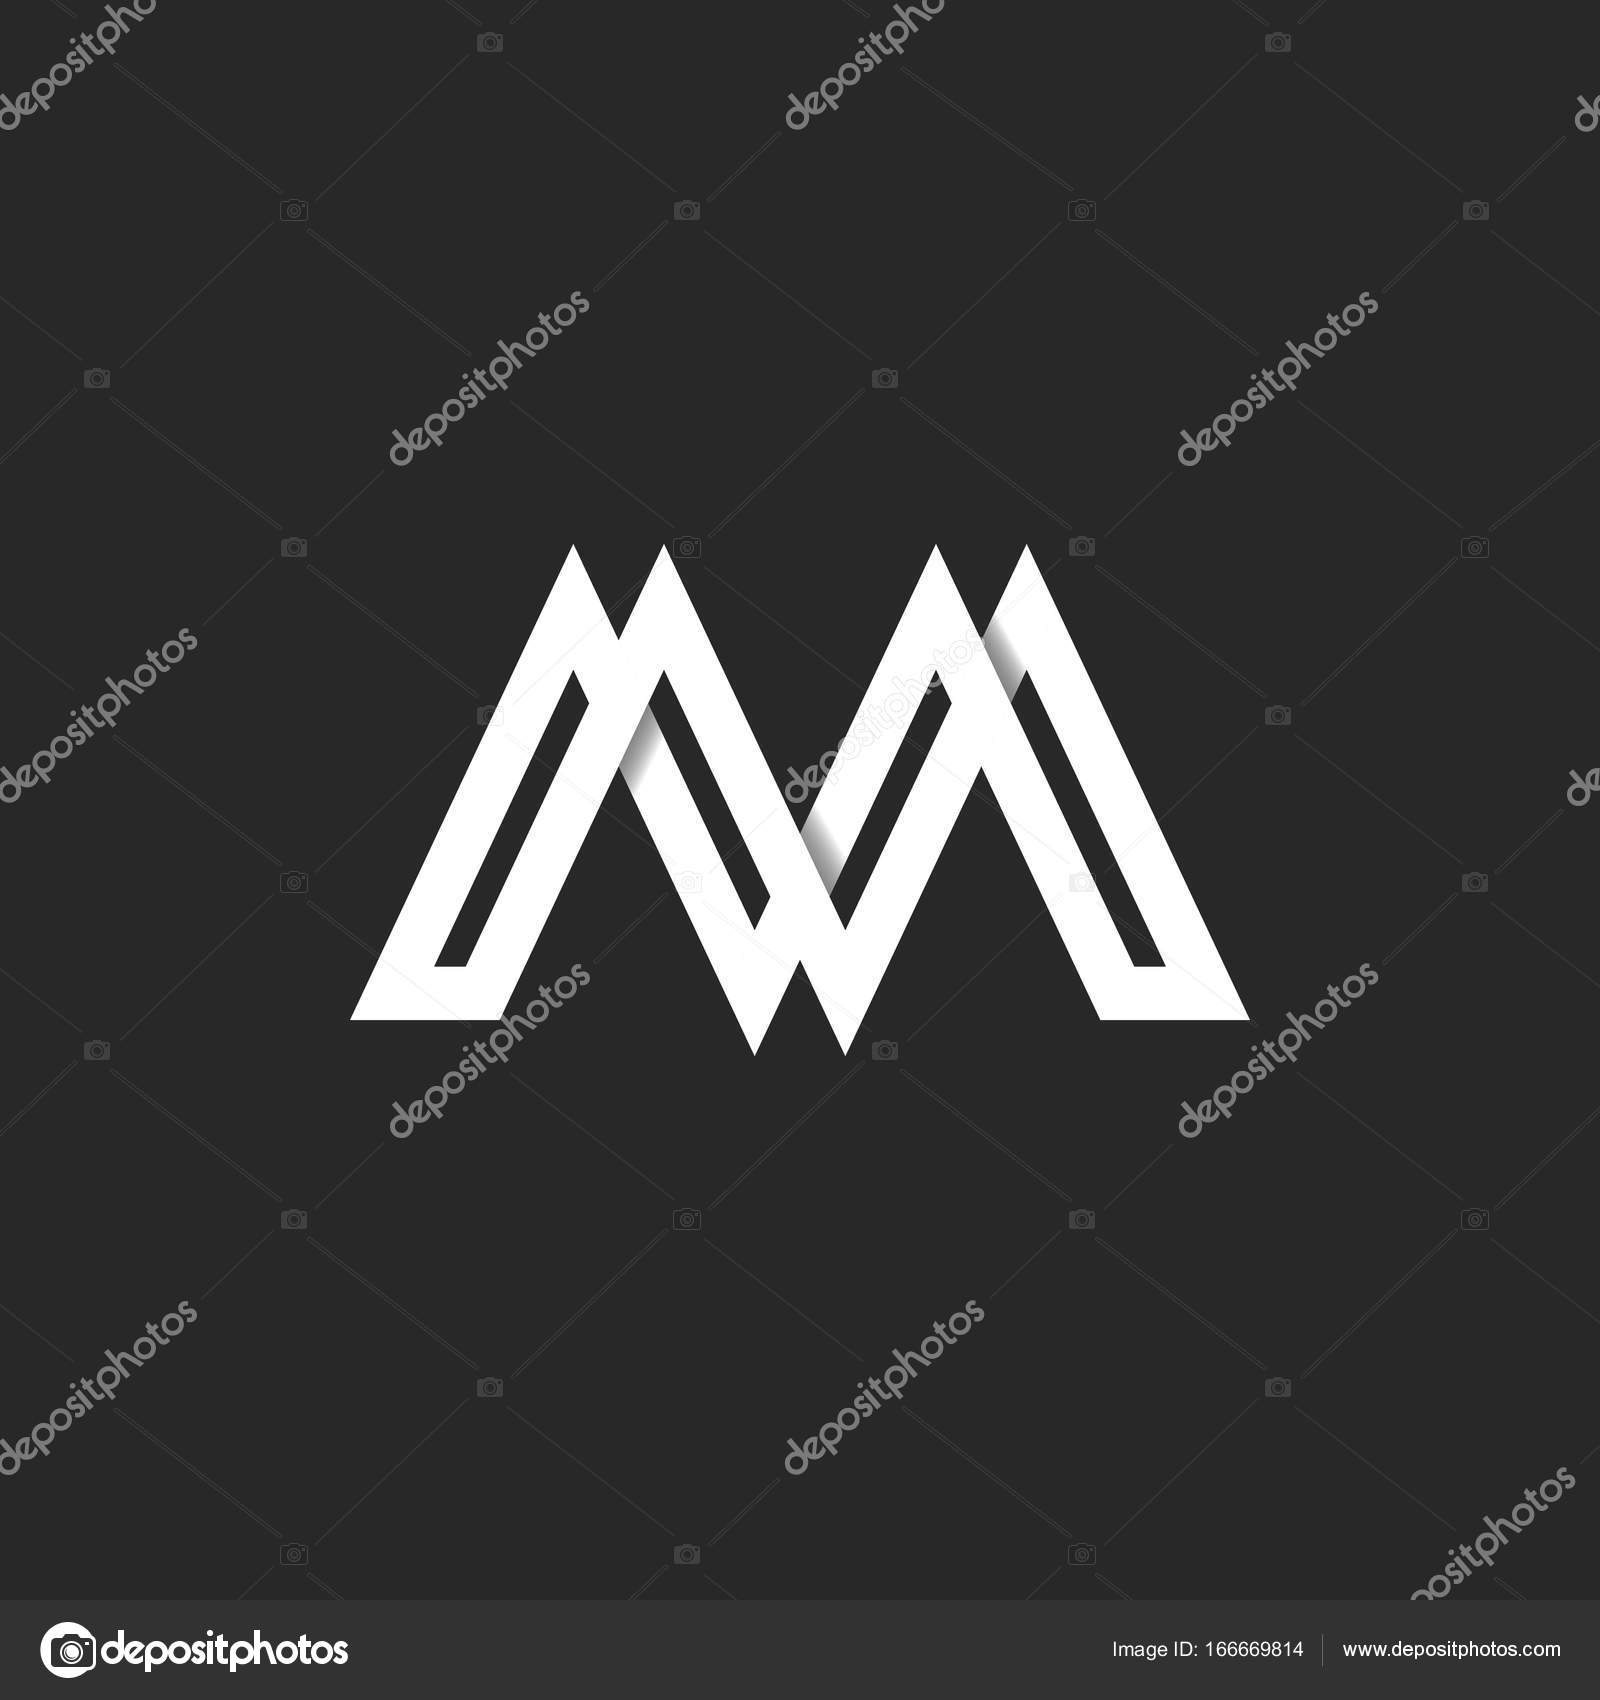 Monogram Letter M Capital Logo, Overlapping Thin Line Initials MM